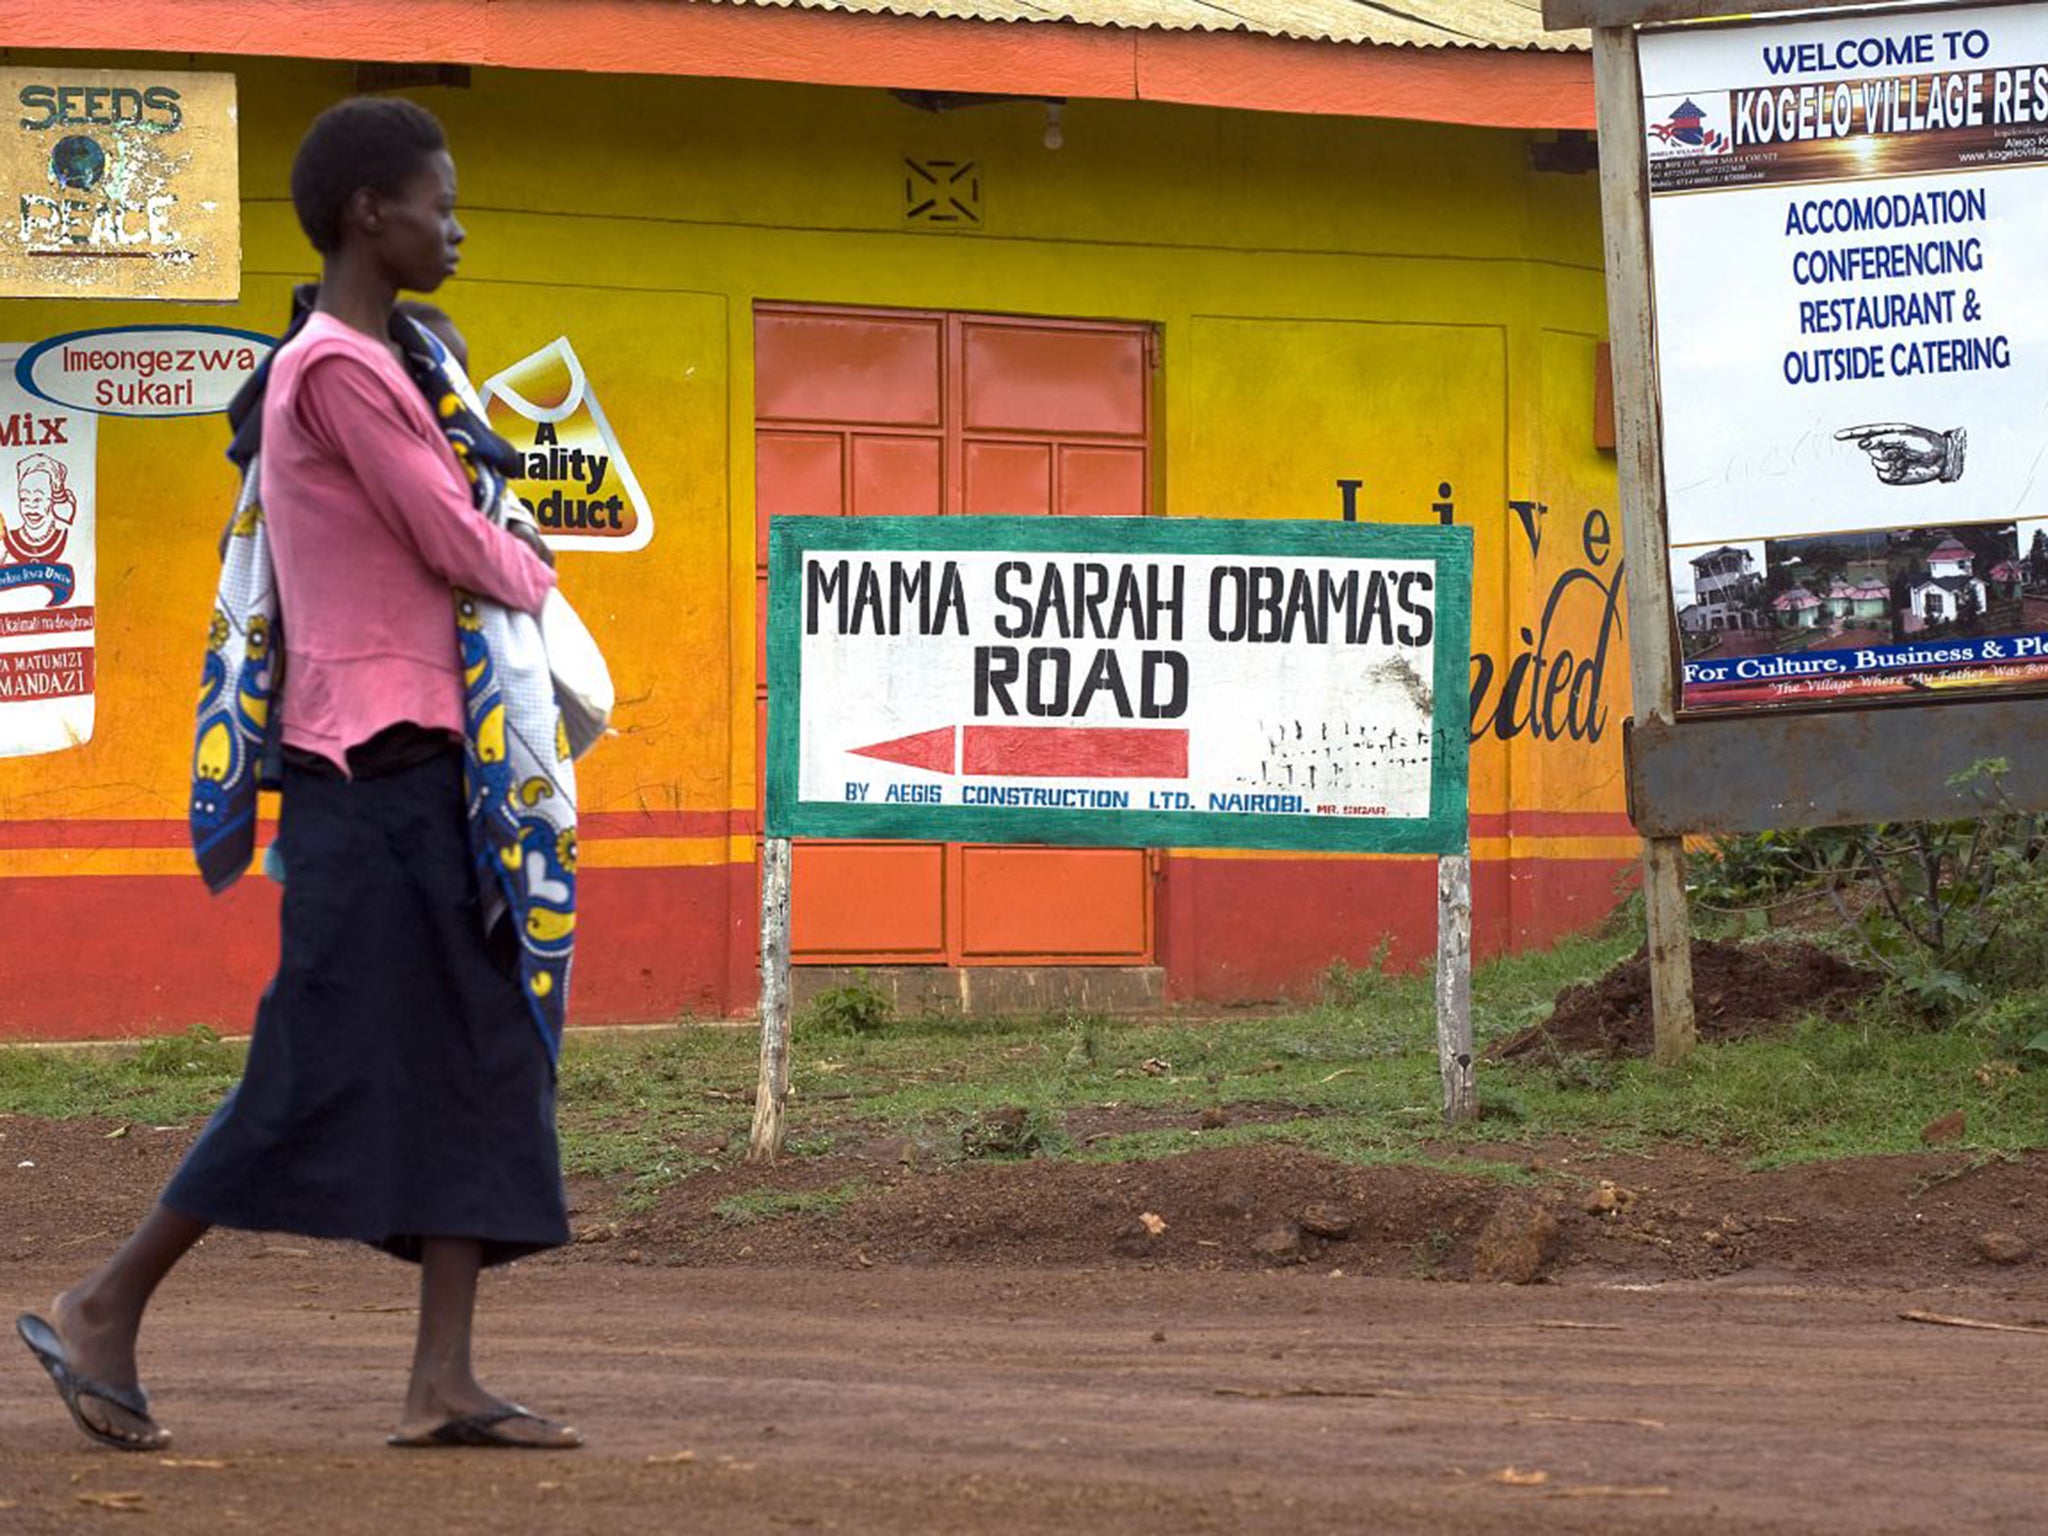 Mama Sarah Obama’s Road in Kogelo, which is named after Barack Obama’s step-grandmother